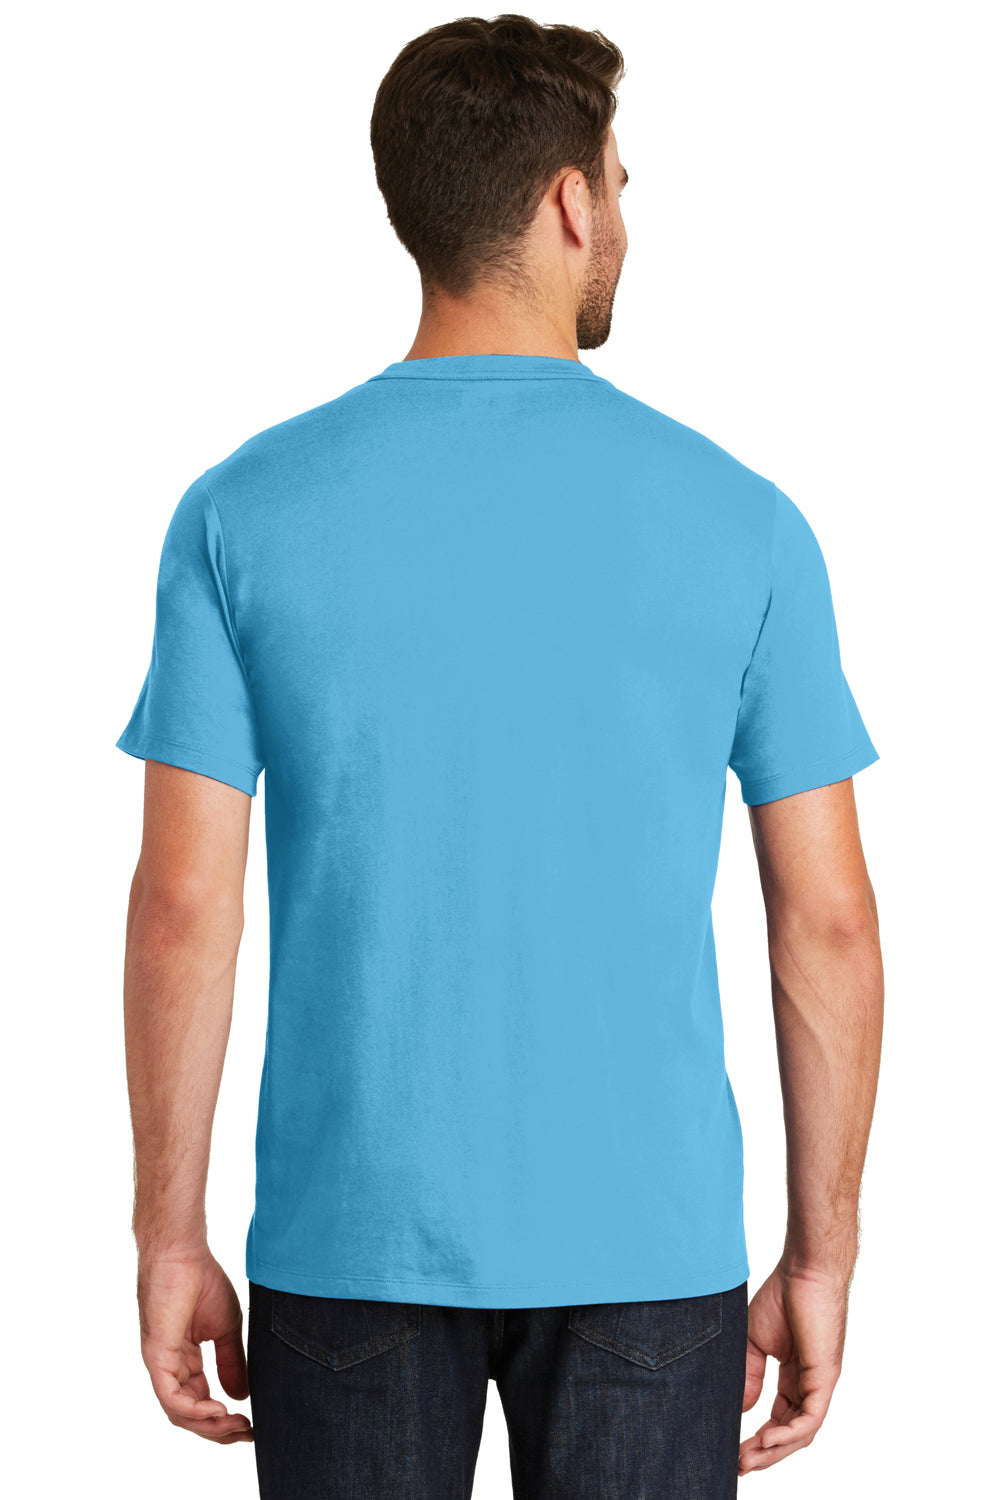 New Era NEA100 Mens Heritage Short Sleeve Crewneck T-Shirt Sky Blue Back